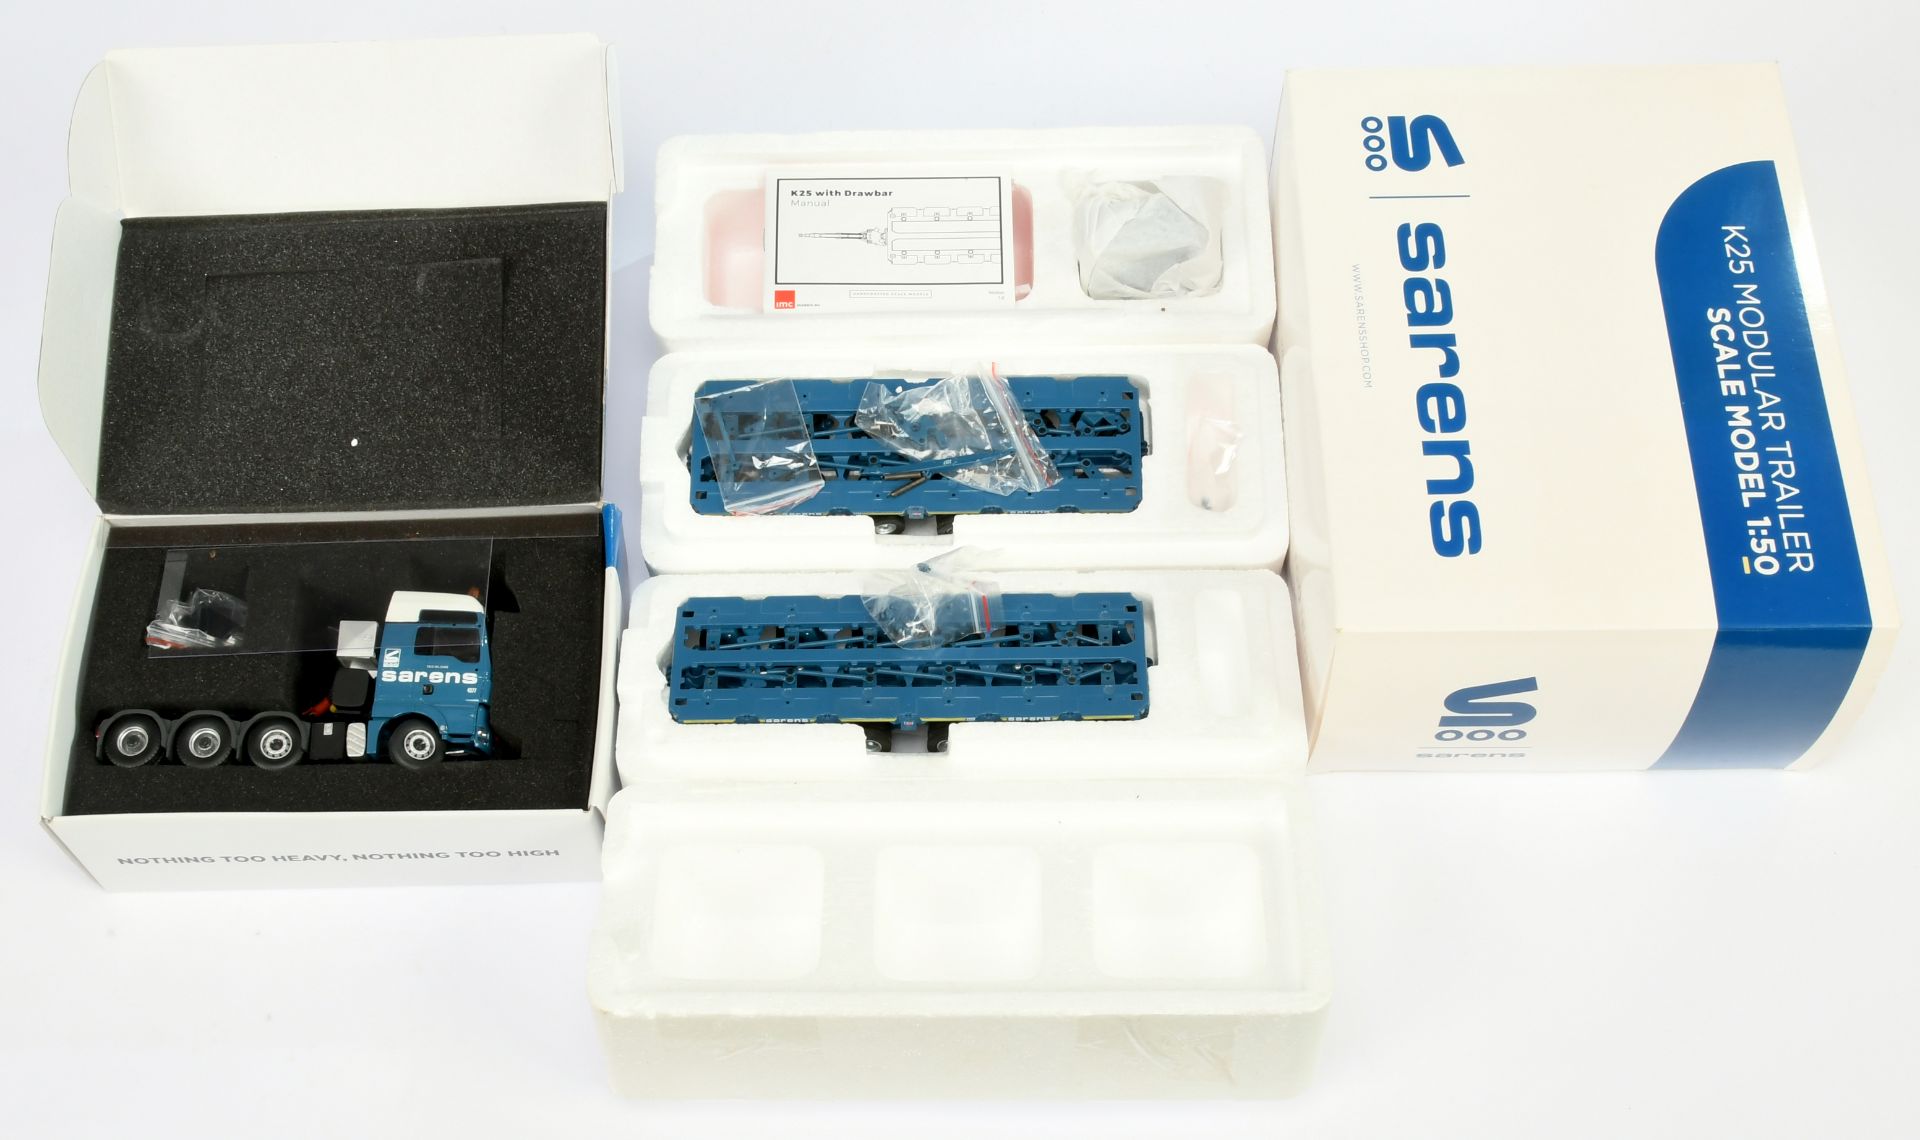 IMC Models  (1/50th) 31-0112  K25 Modular Trailer "Sarens" Blue and Tekno MAN Cab Unit - conditio...